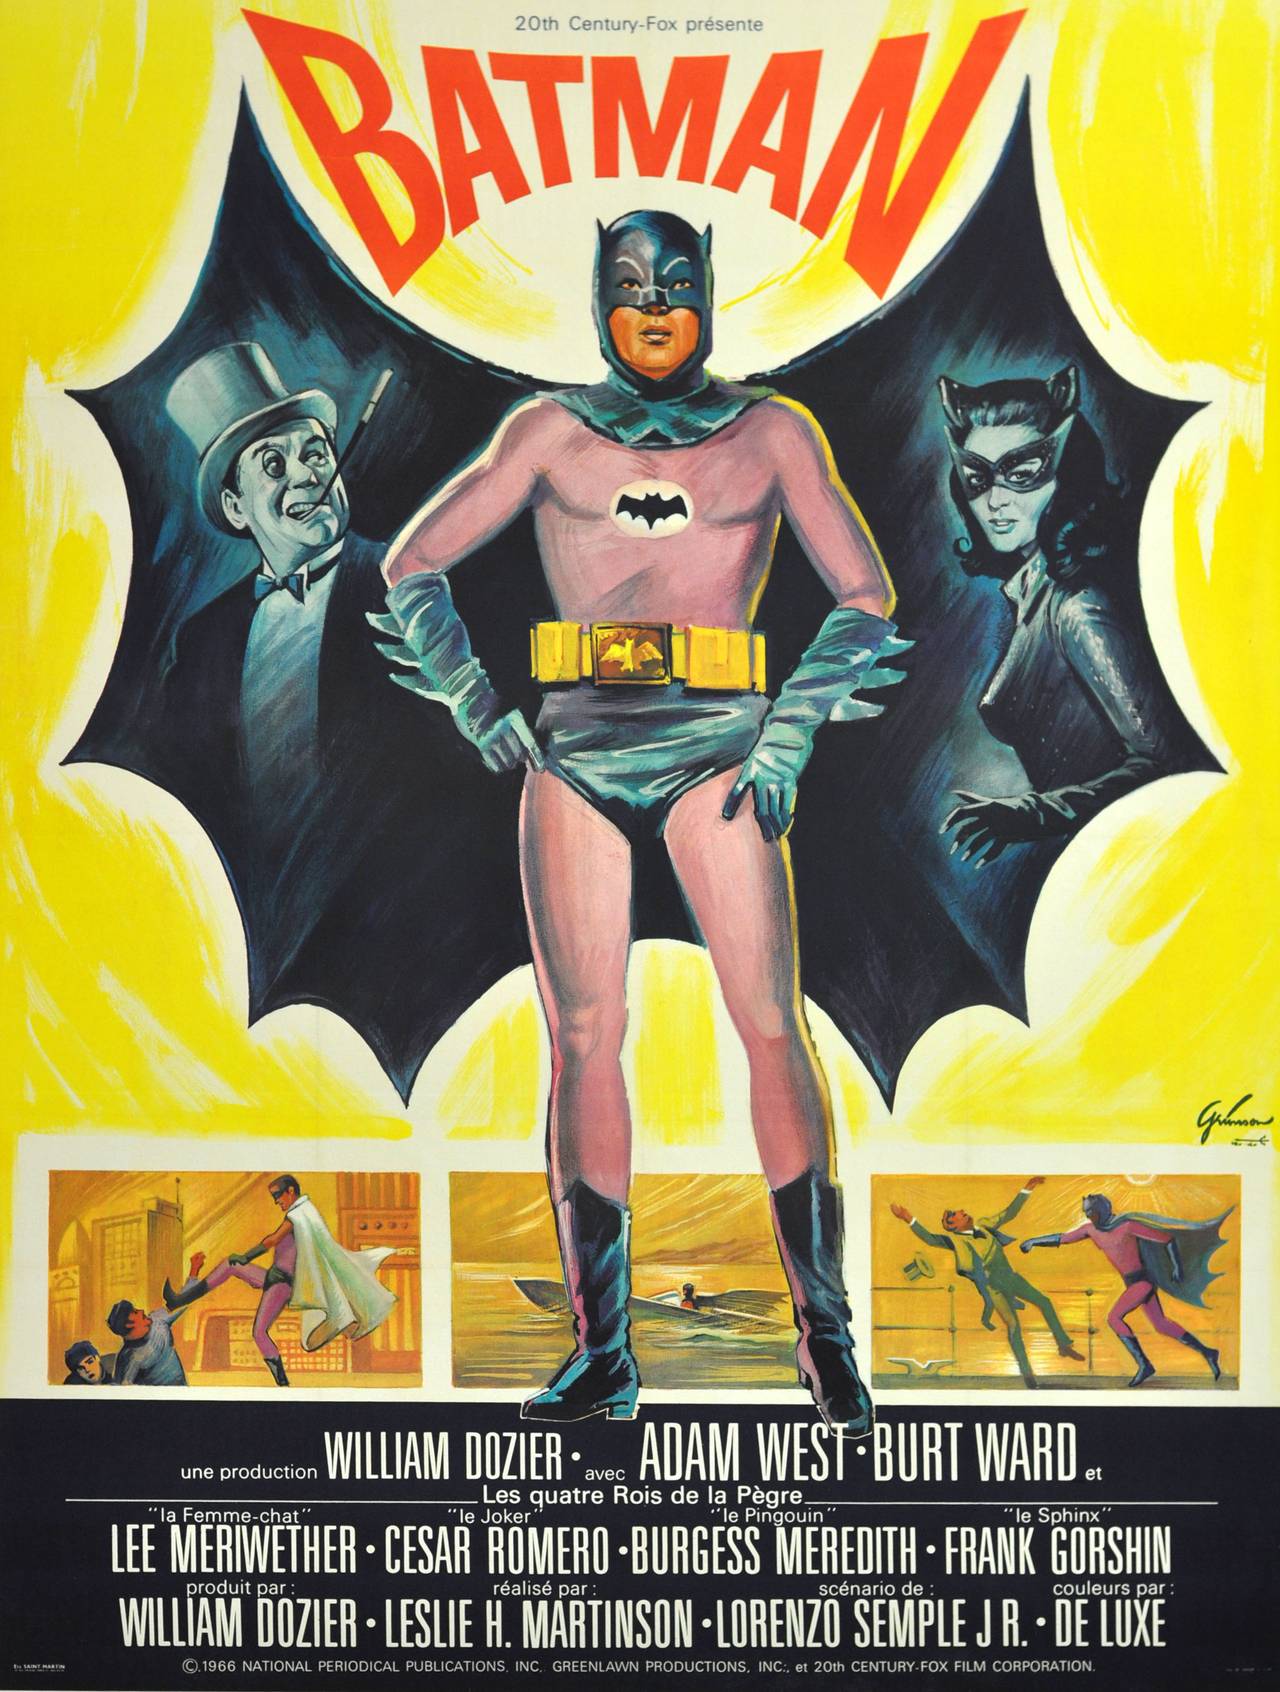 Boris Grinsson Print - Large Original 1966 Movie Poster For Batman Starring Adam West And Burt Ward